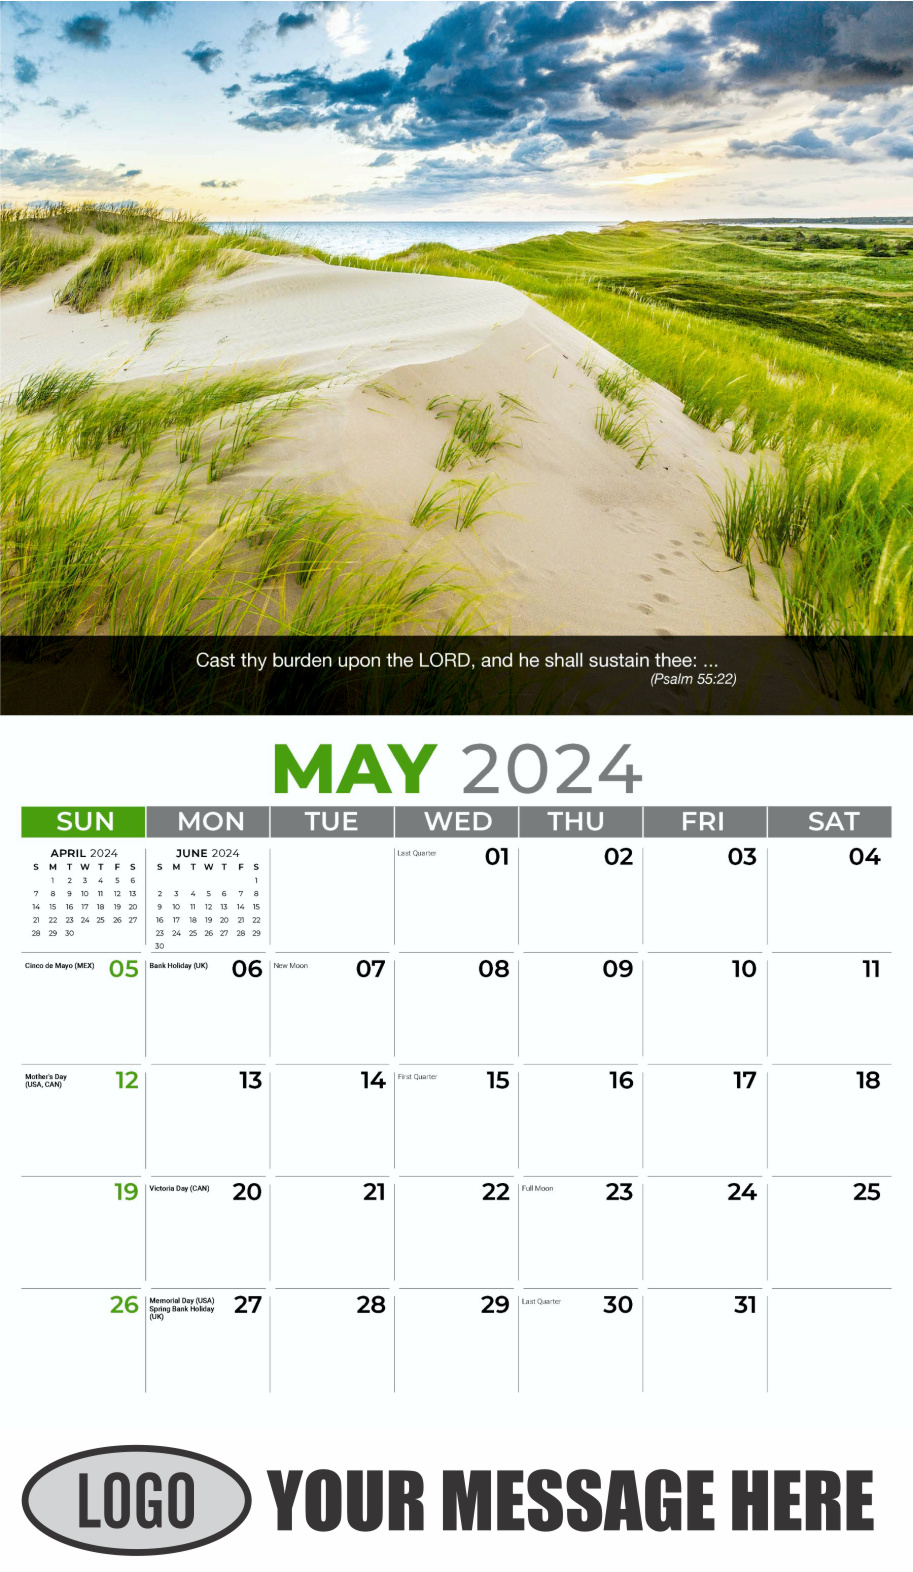 Faith Passages 2024 Christian Business Advertising Calendar - May